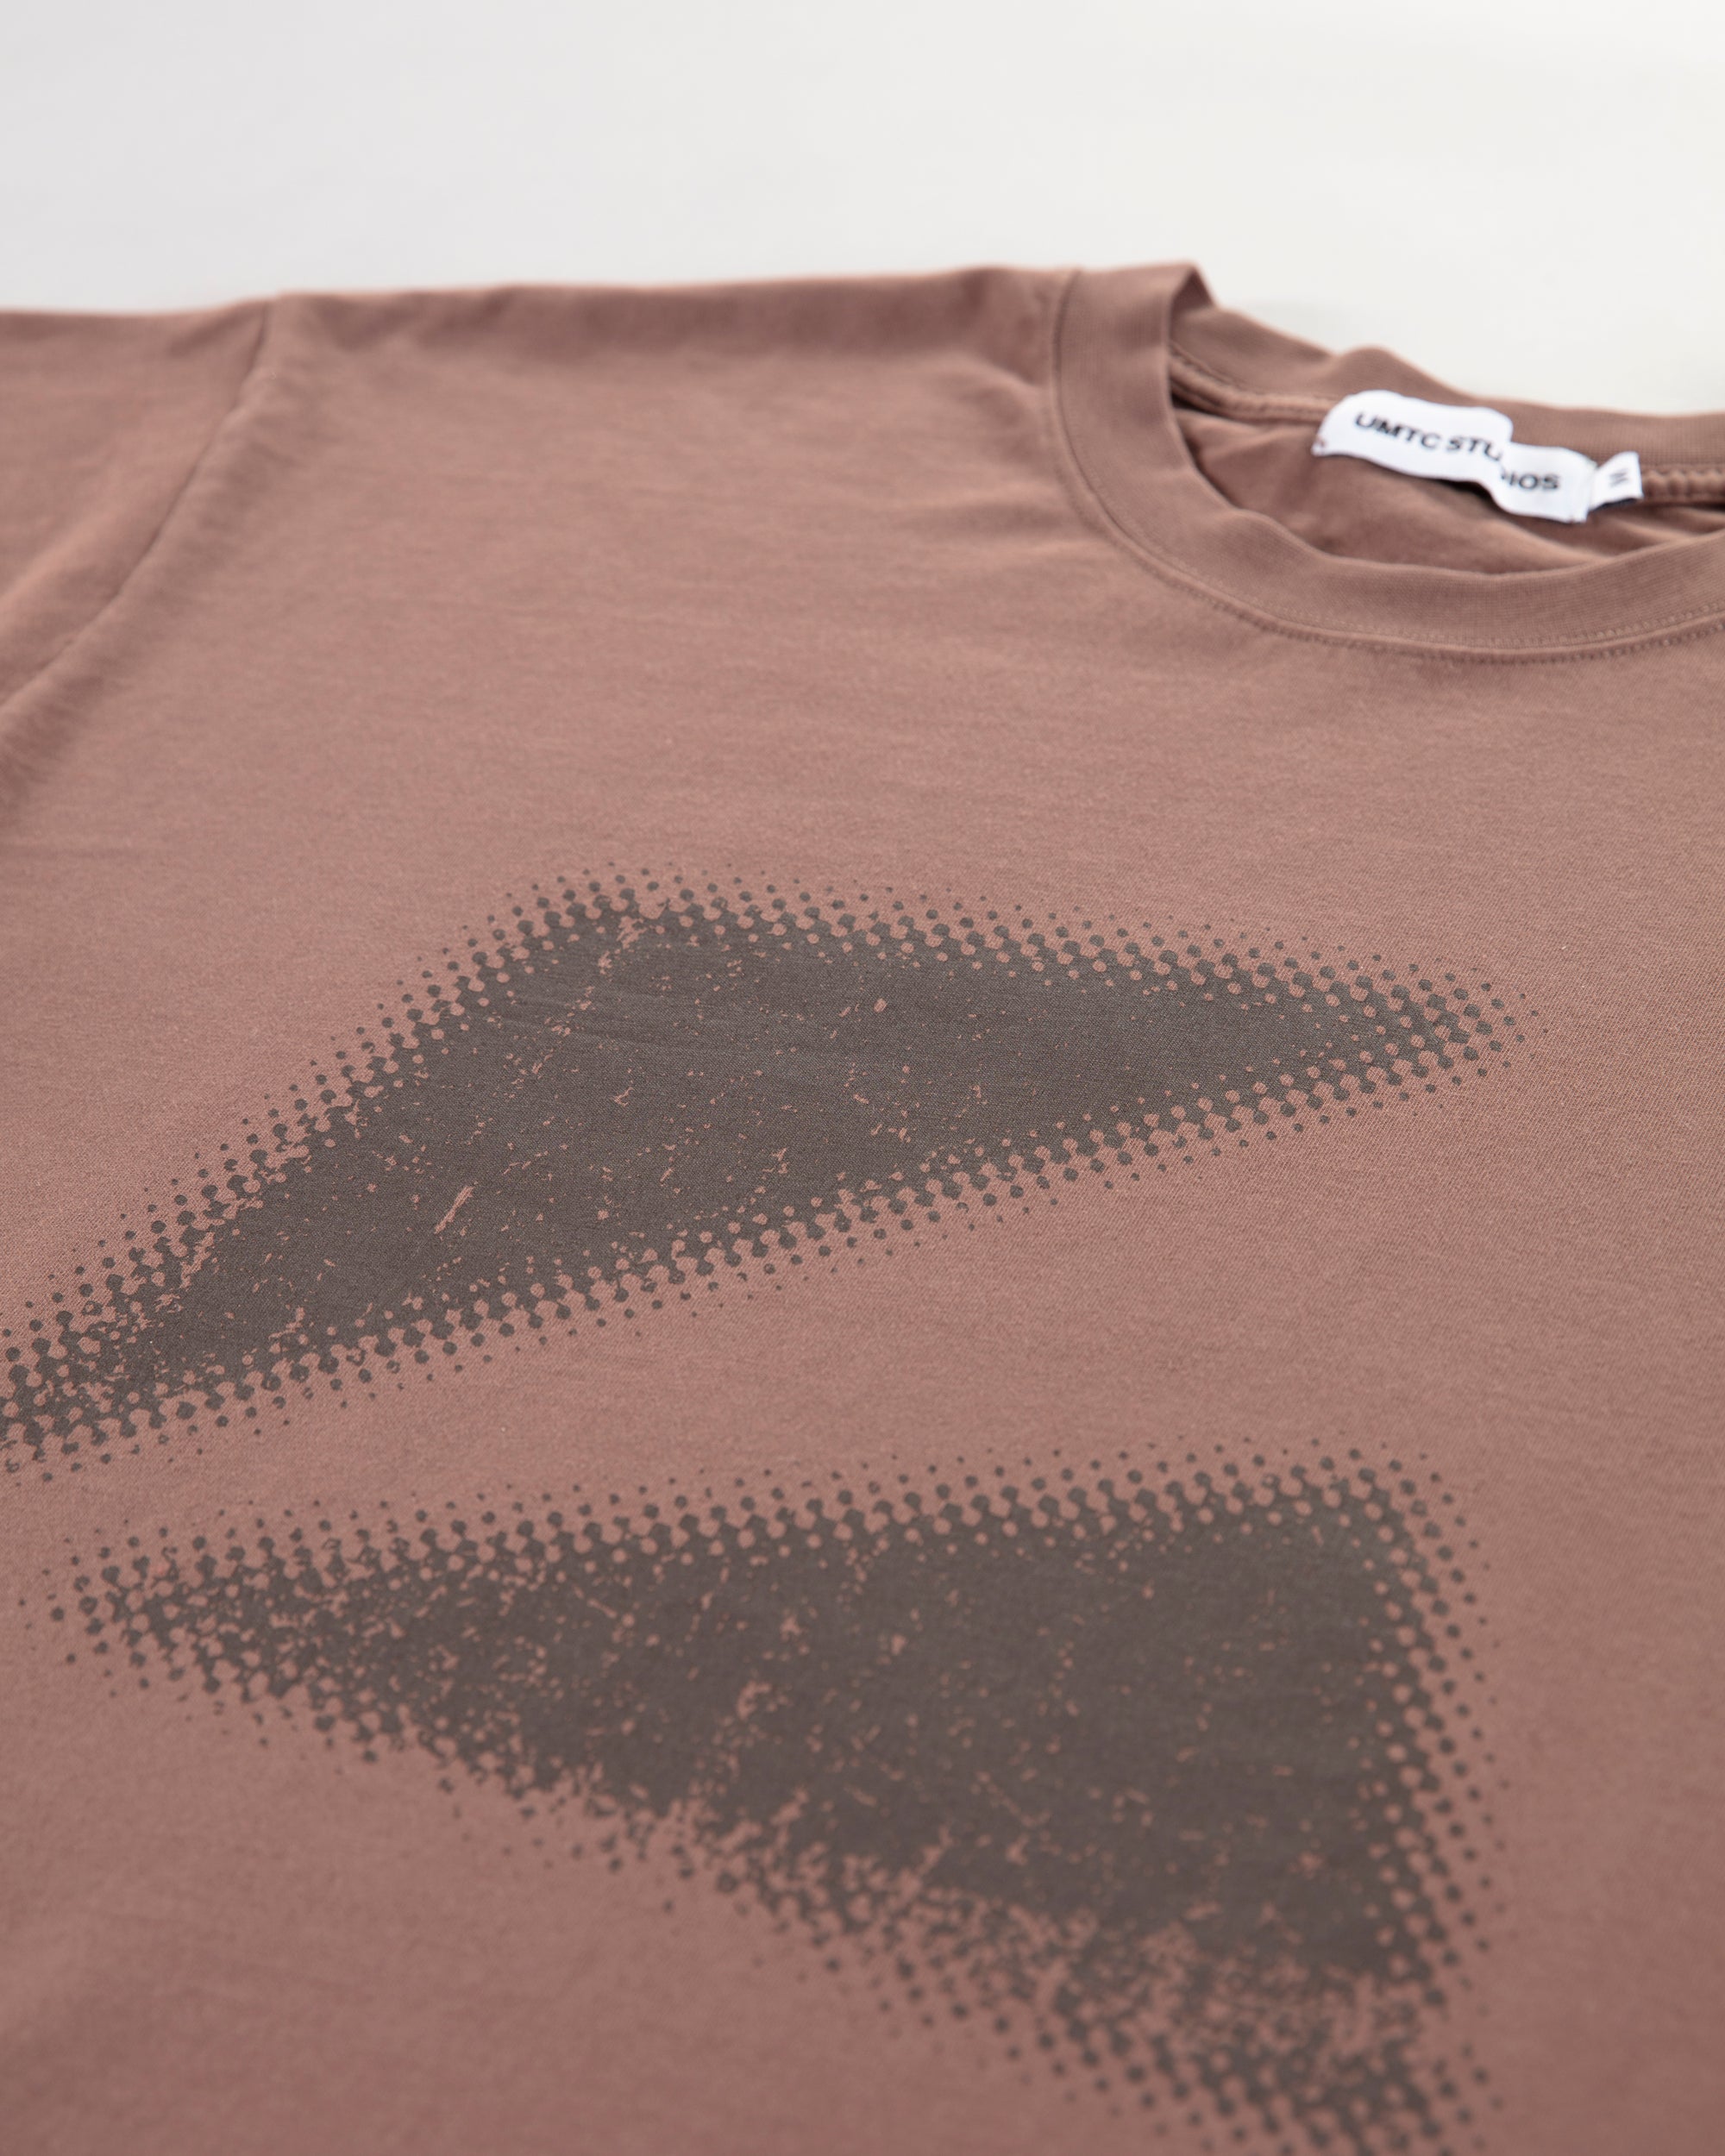 Triangle T-Shirt (oak)